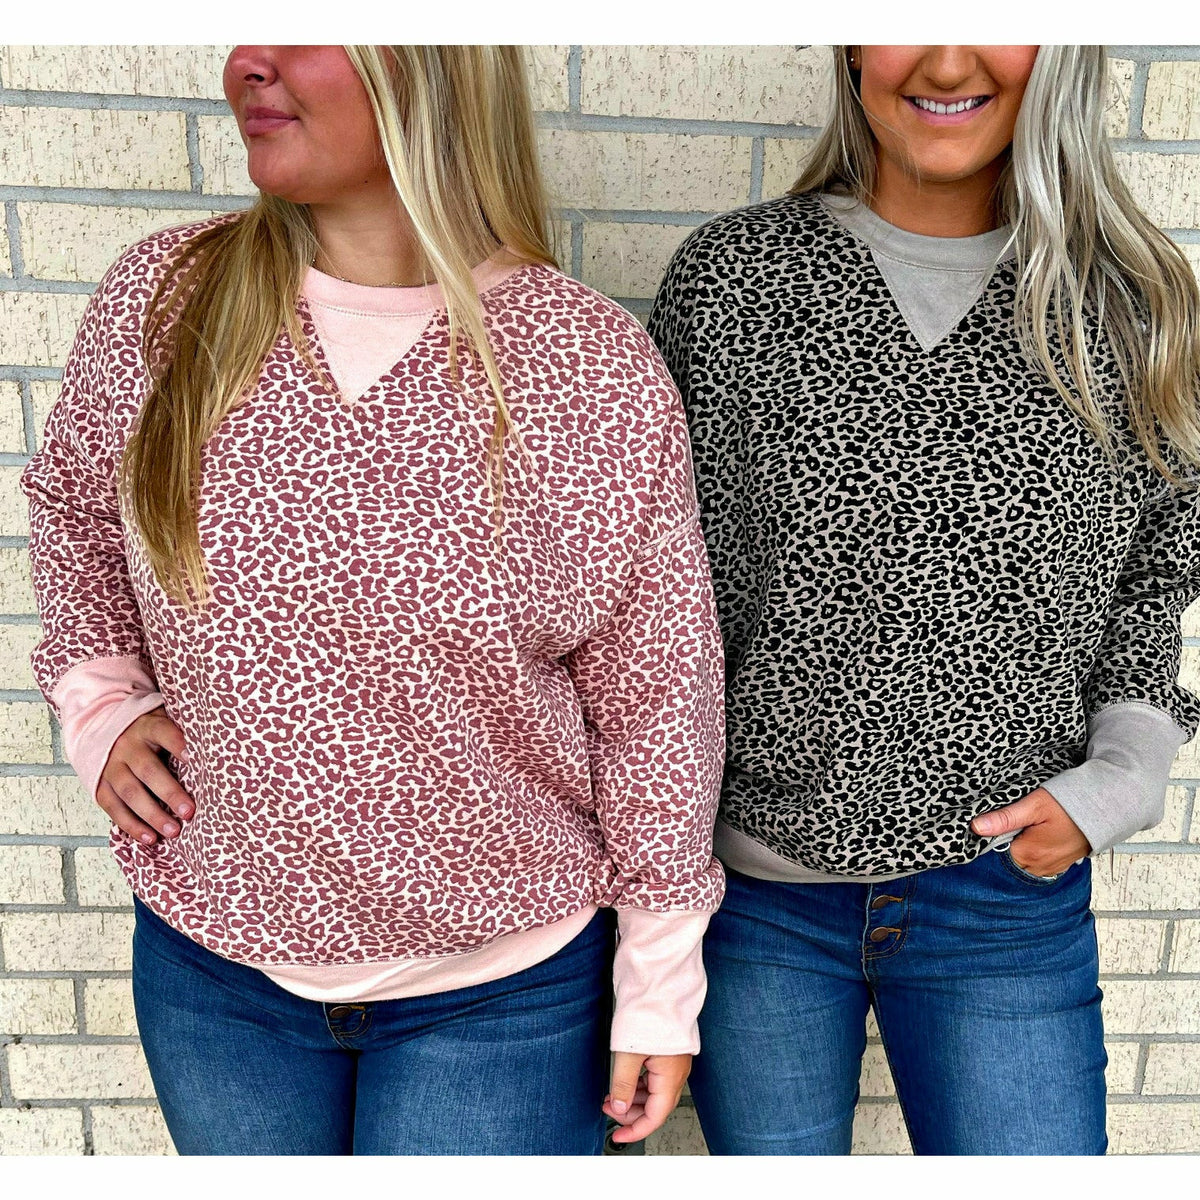 Leopard (pink or tan) Sweatshirt